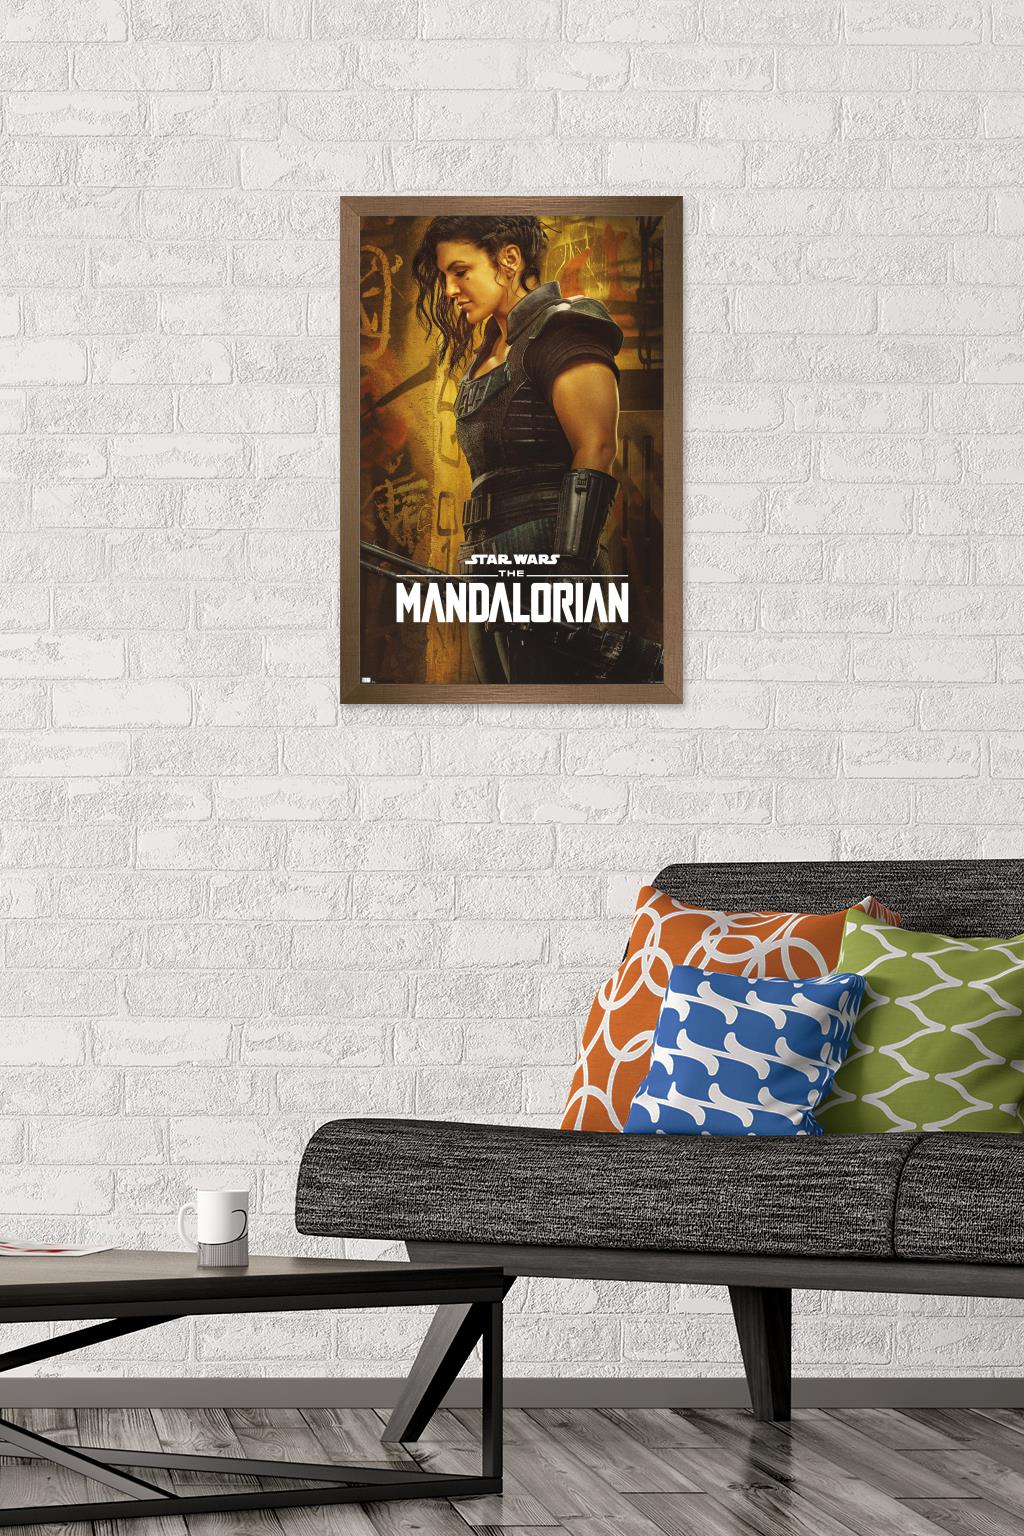 Star Wars: The Mandalorian Season 2 - Cara Dune Wall Poster, 14.725" x 22.375", Framed - image 2 of 5